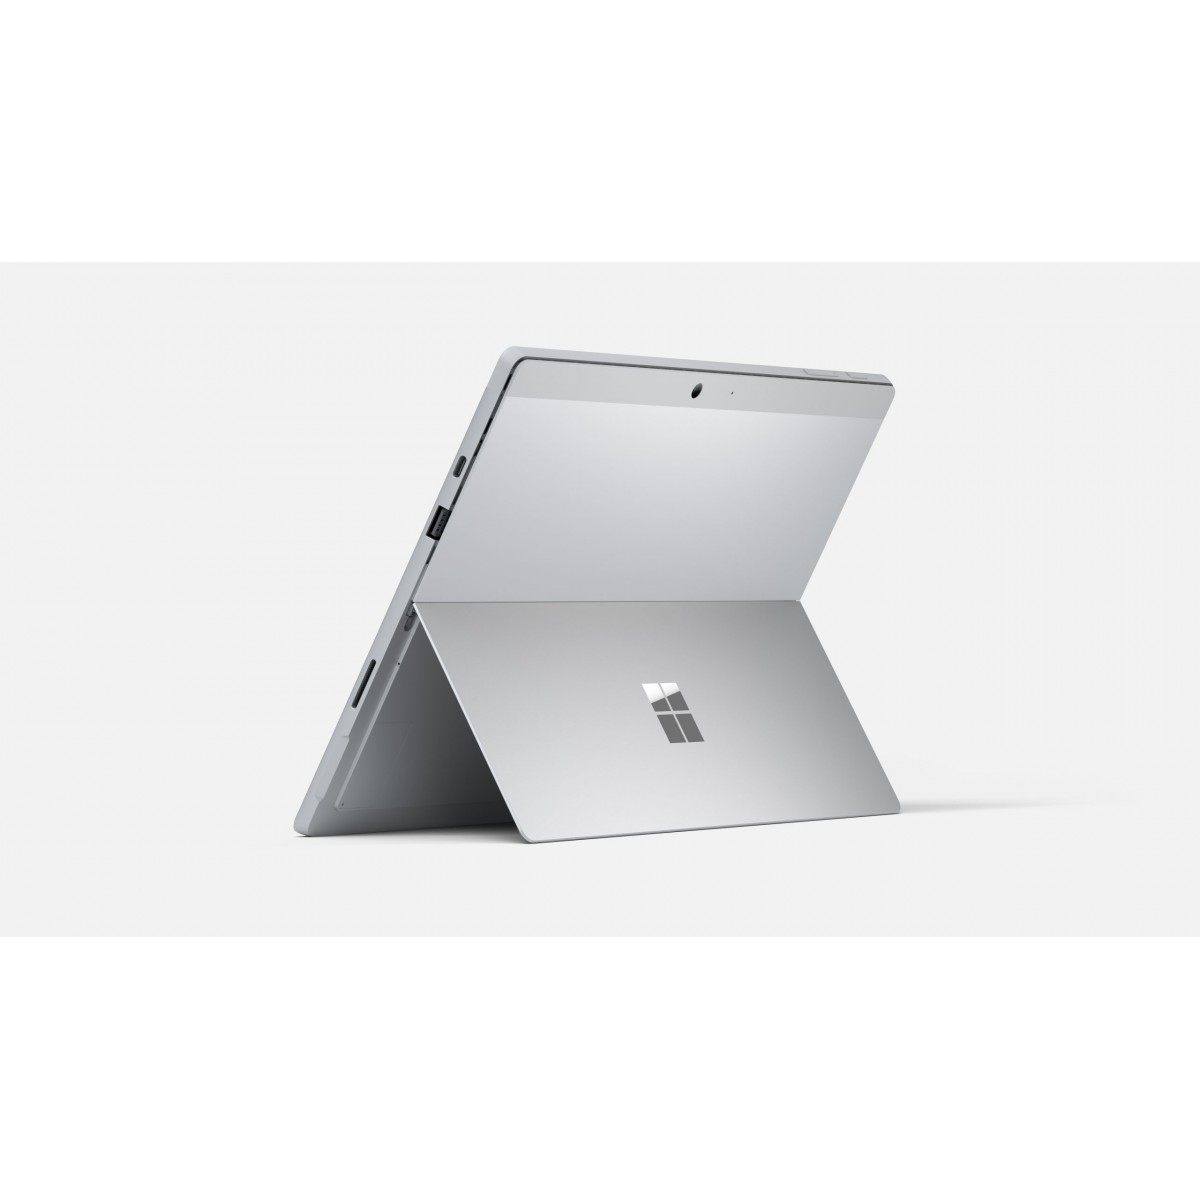 Surface Pro 7+ - 12.3inch - i5 - 8 GB RAM - 128 GB SSD - Win 10 PRO - Platinum